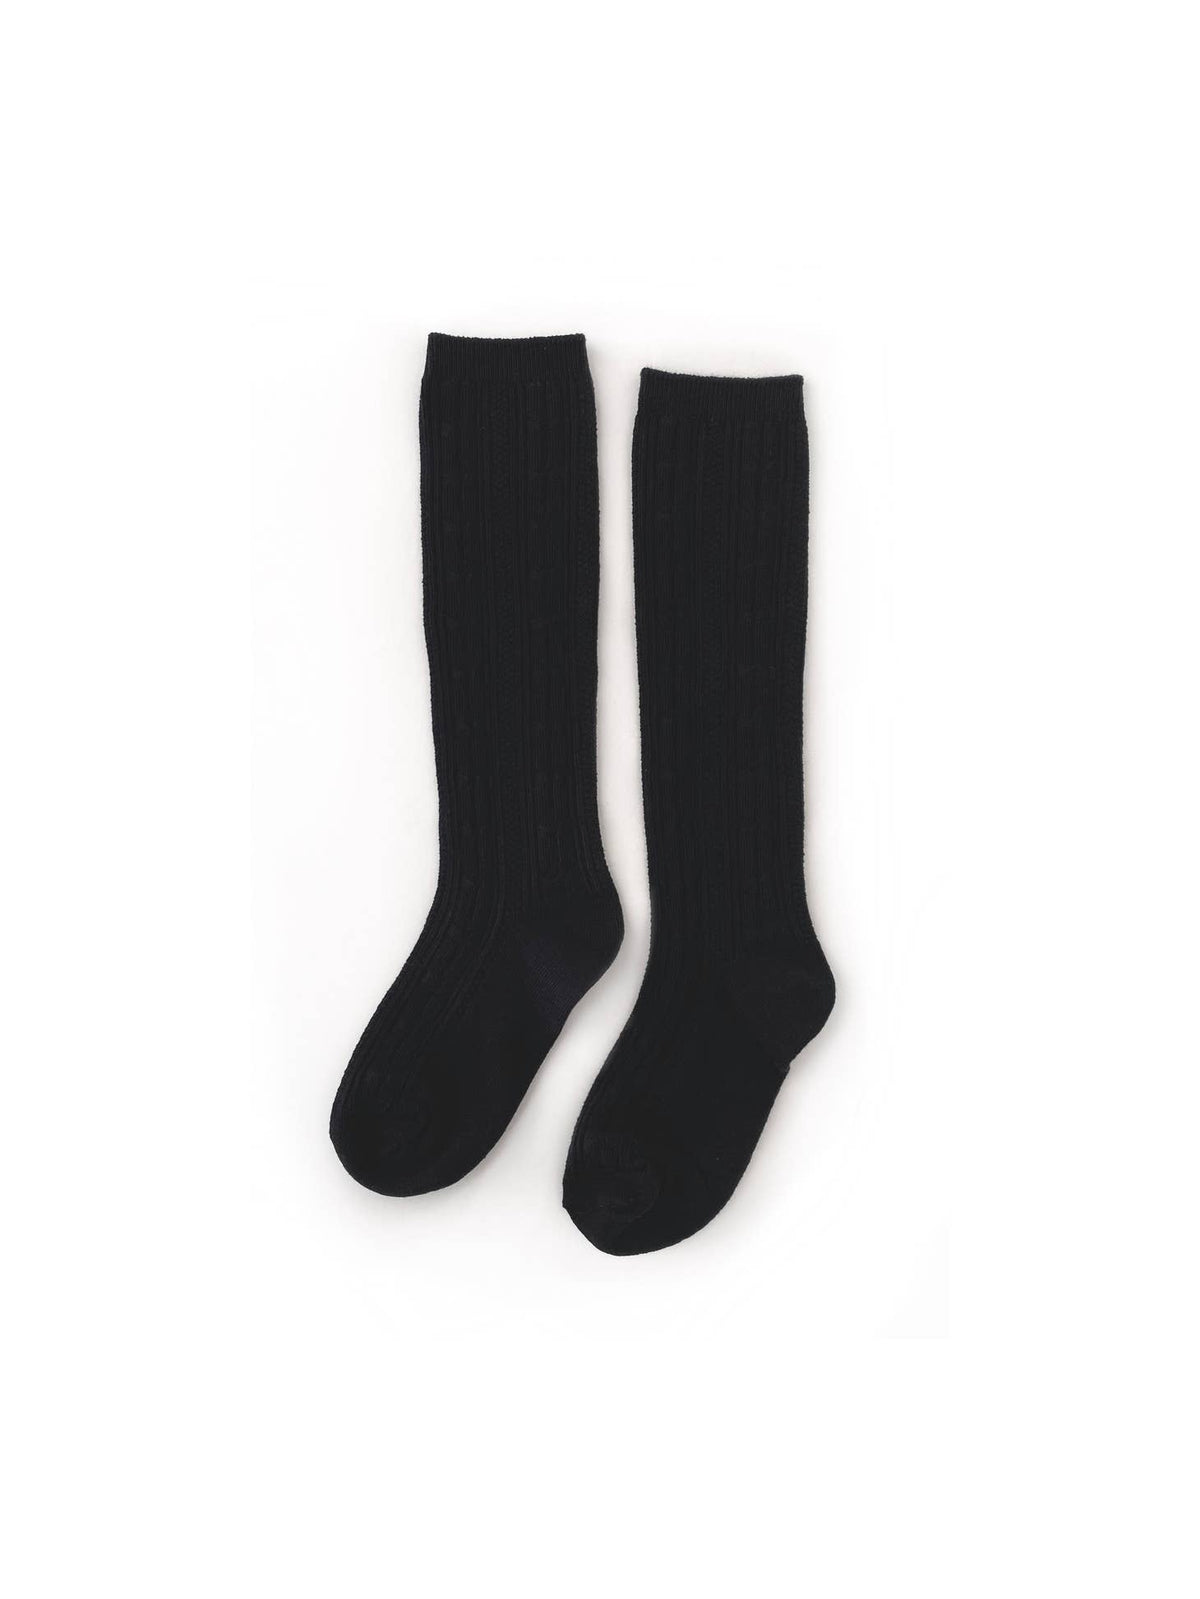 Black Cable Knit Knee Highs Socks